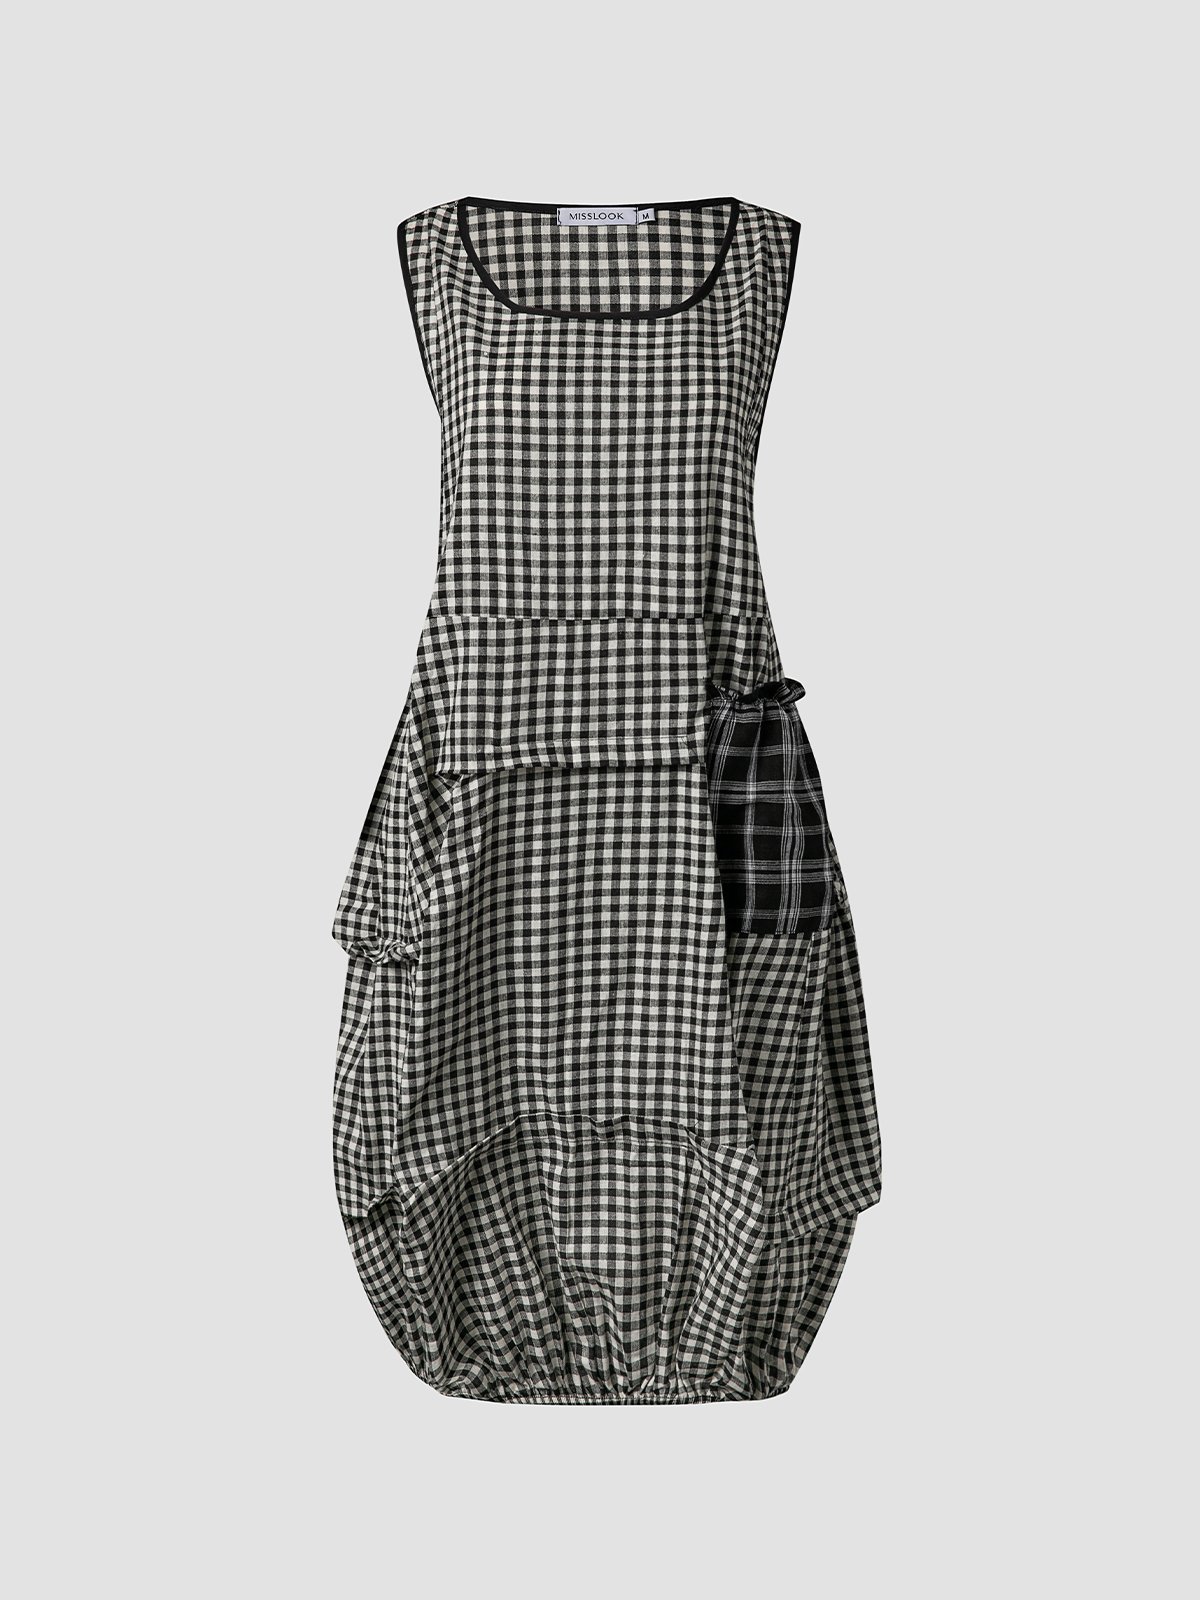 Checkered Women Summer MIdi Weaving Dress With Pockets